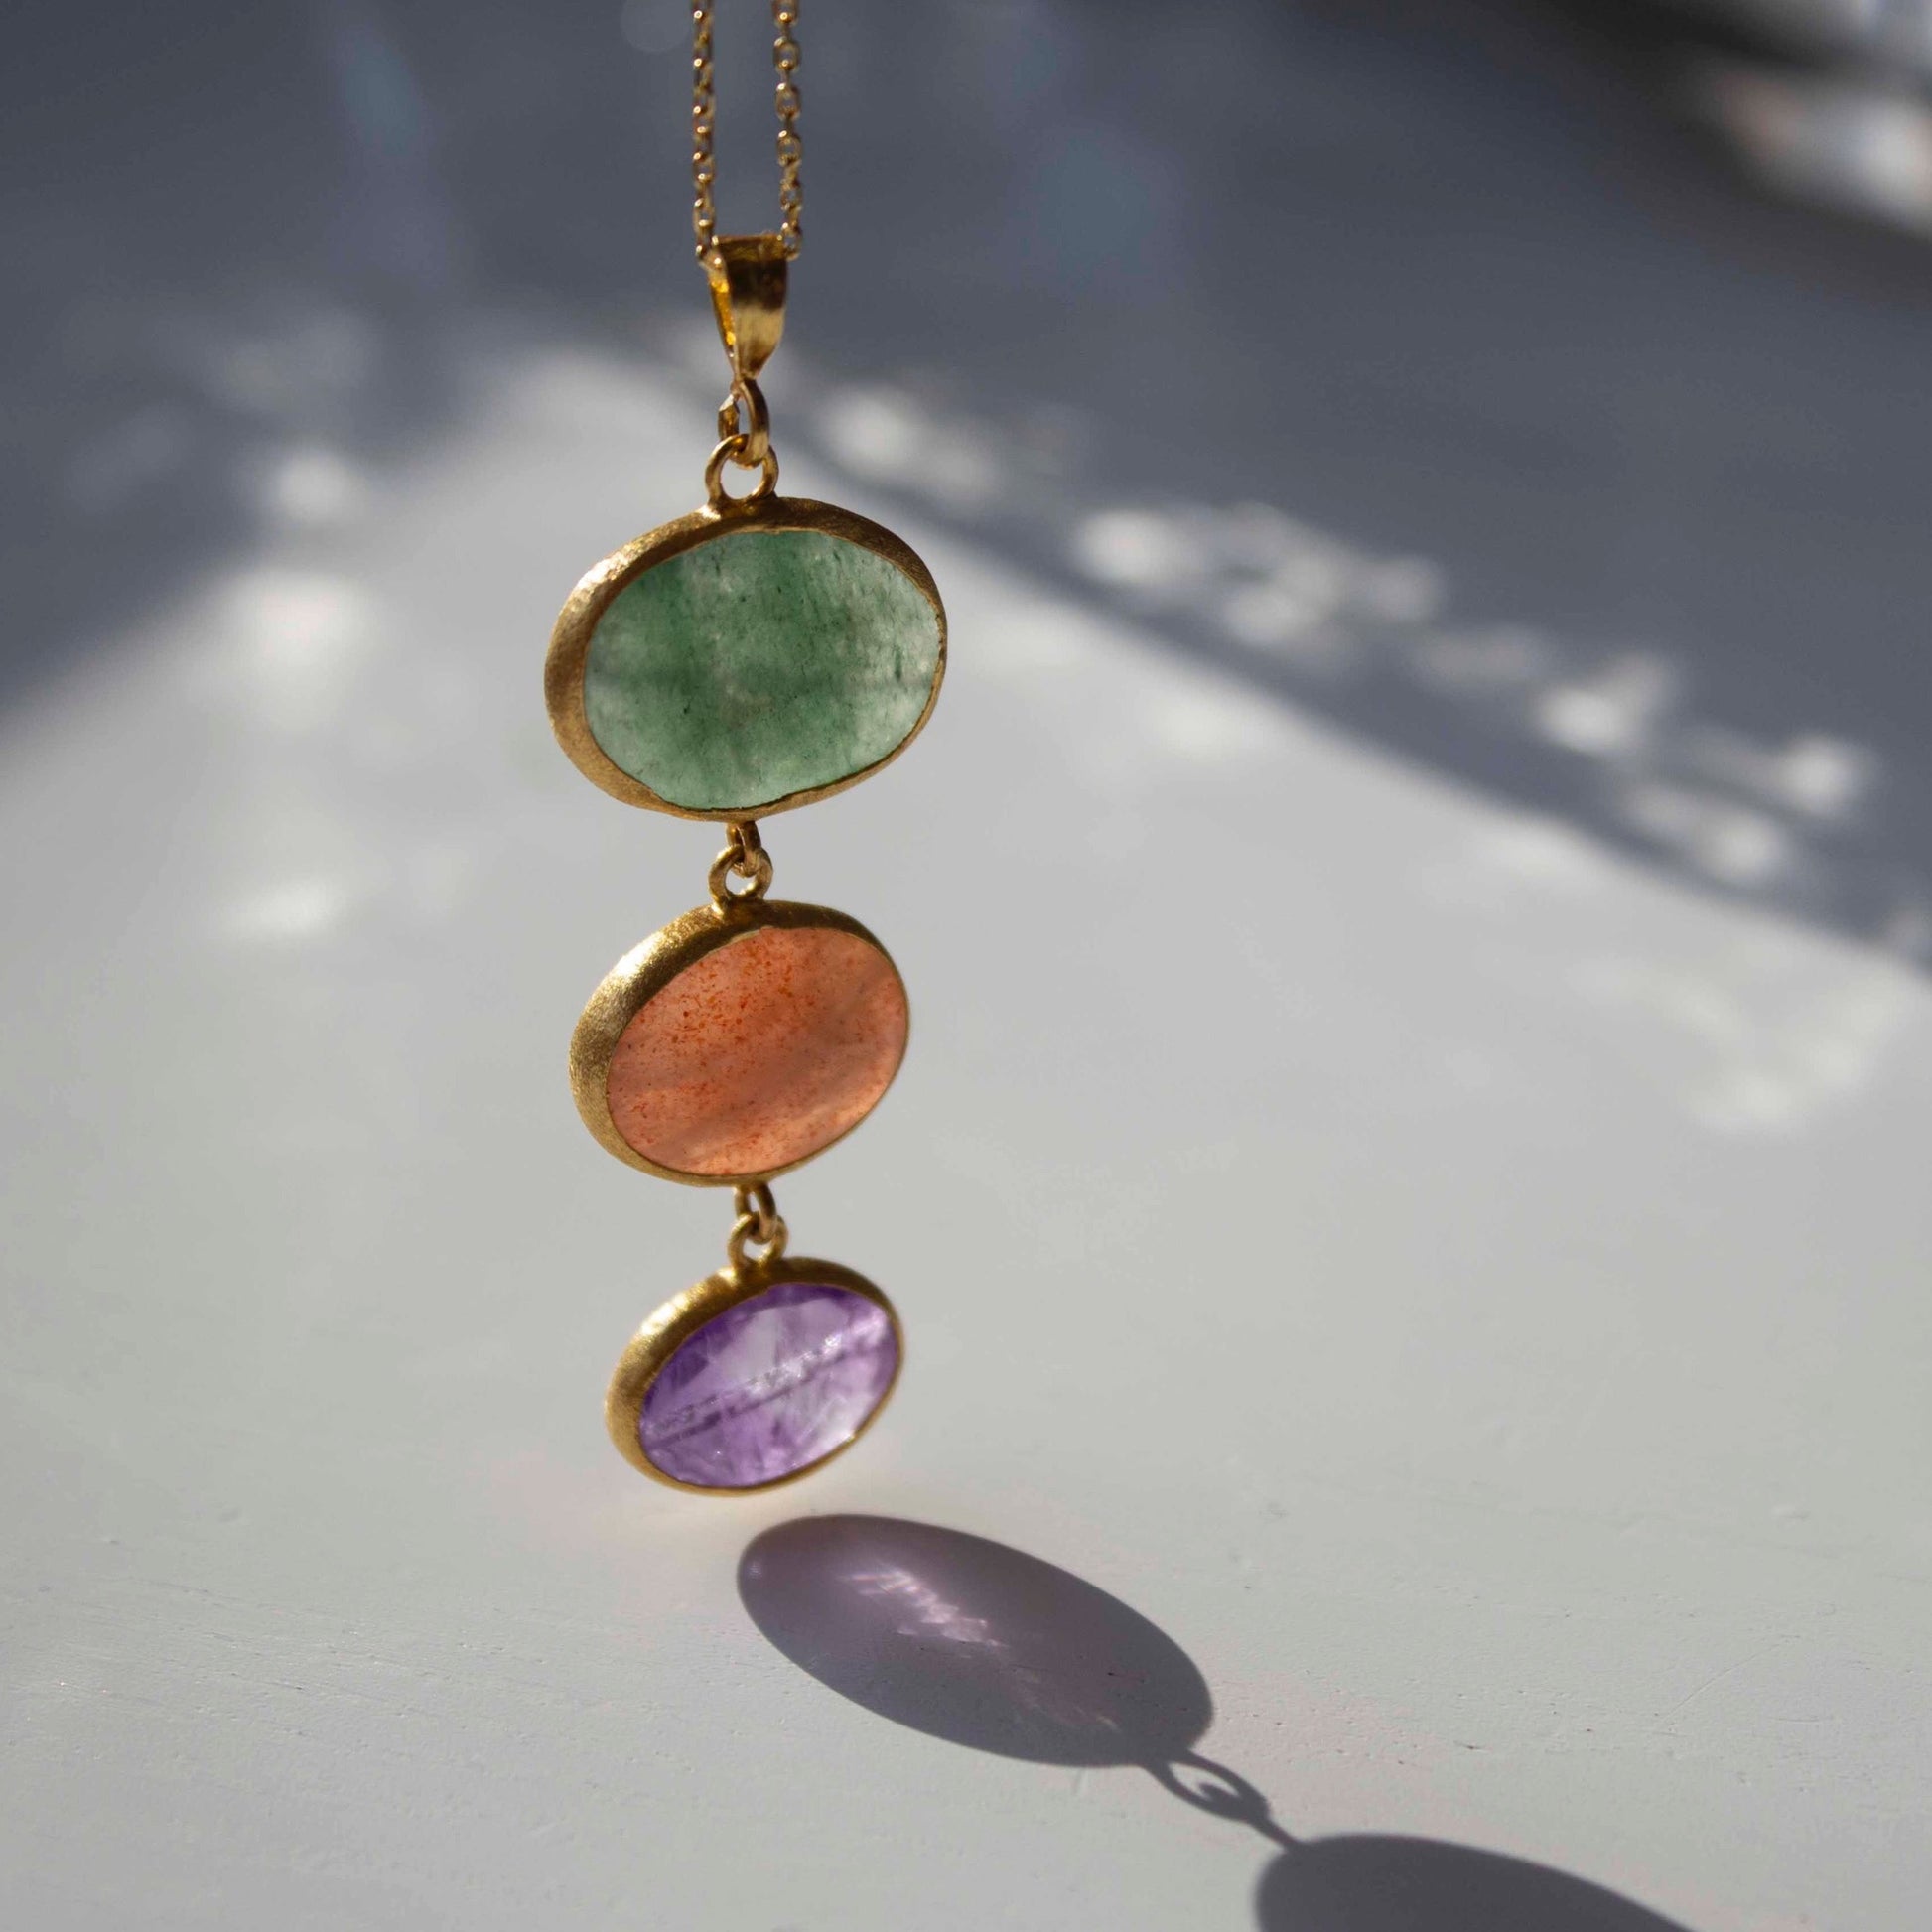 Green aventurine, pink moonstone and amethyst creating a harmonious pendant, Charites